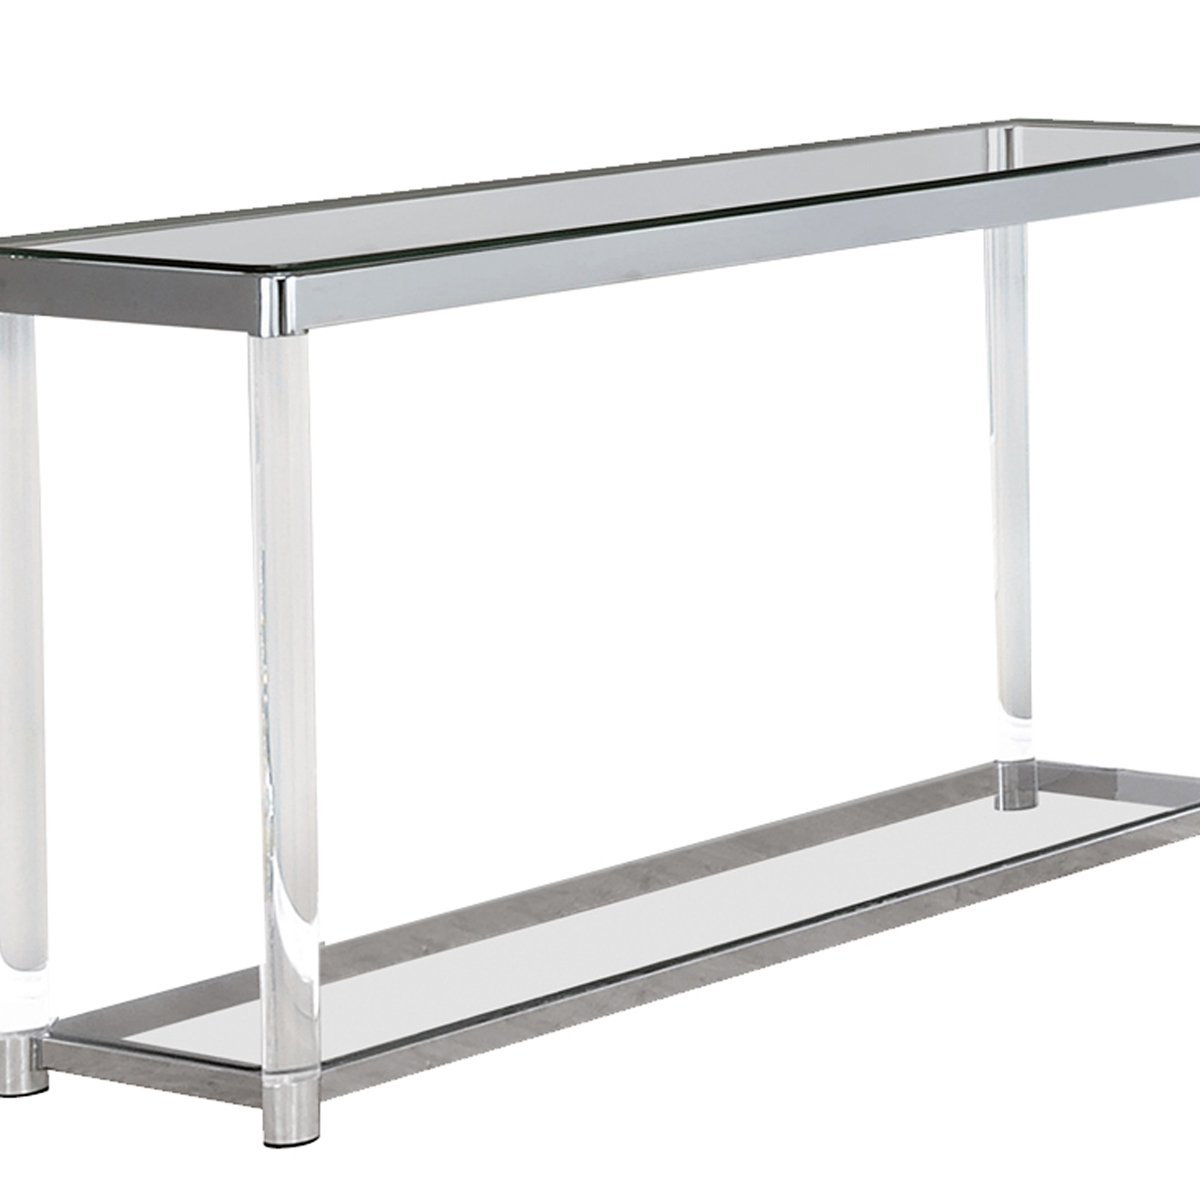 Acrylic Frame Sofa Table With Glass Top And Bottom Shelf, Clear And Chrome- Saltoro Sherpi